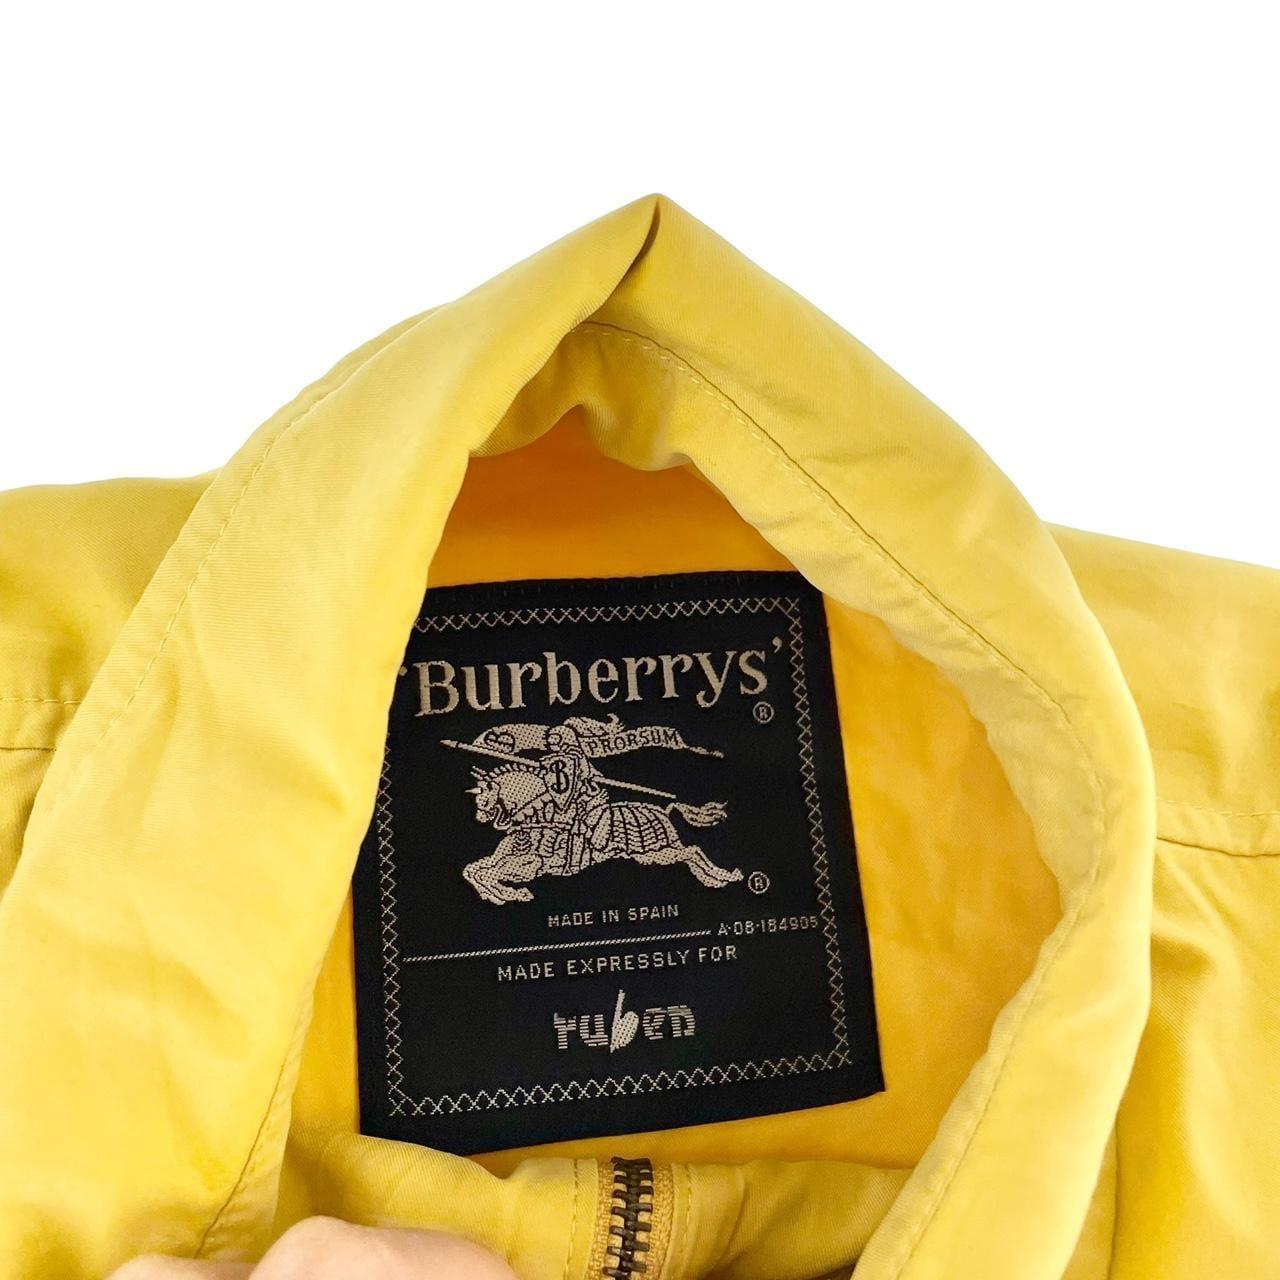 Vintage Burberry jacket size M - Known Source